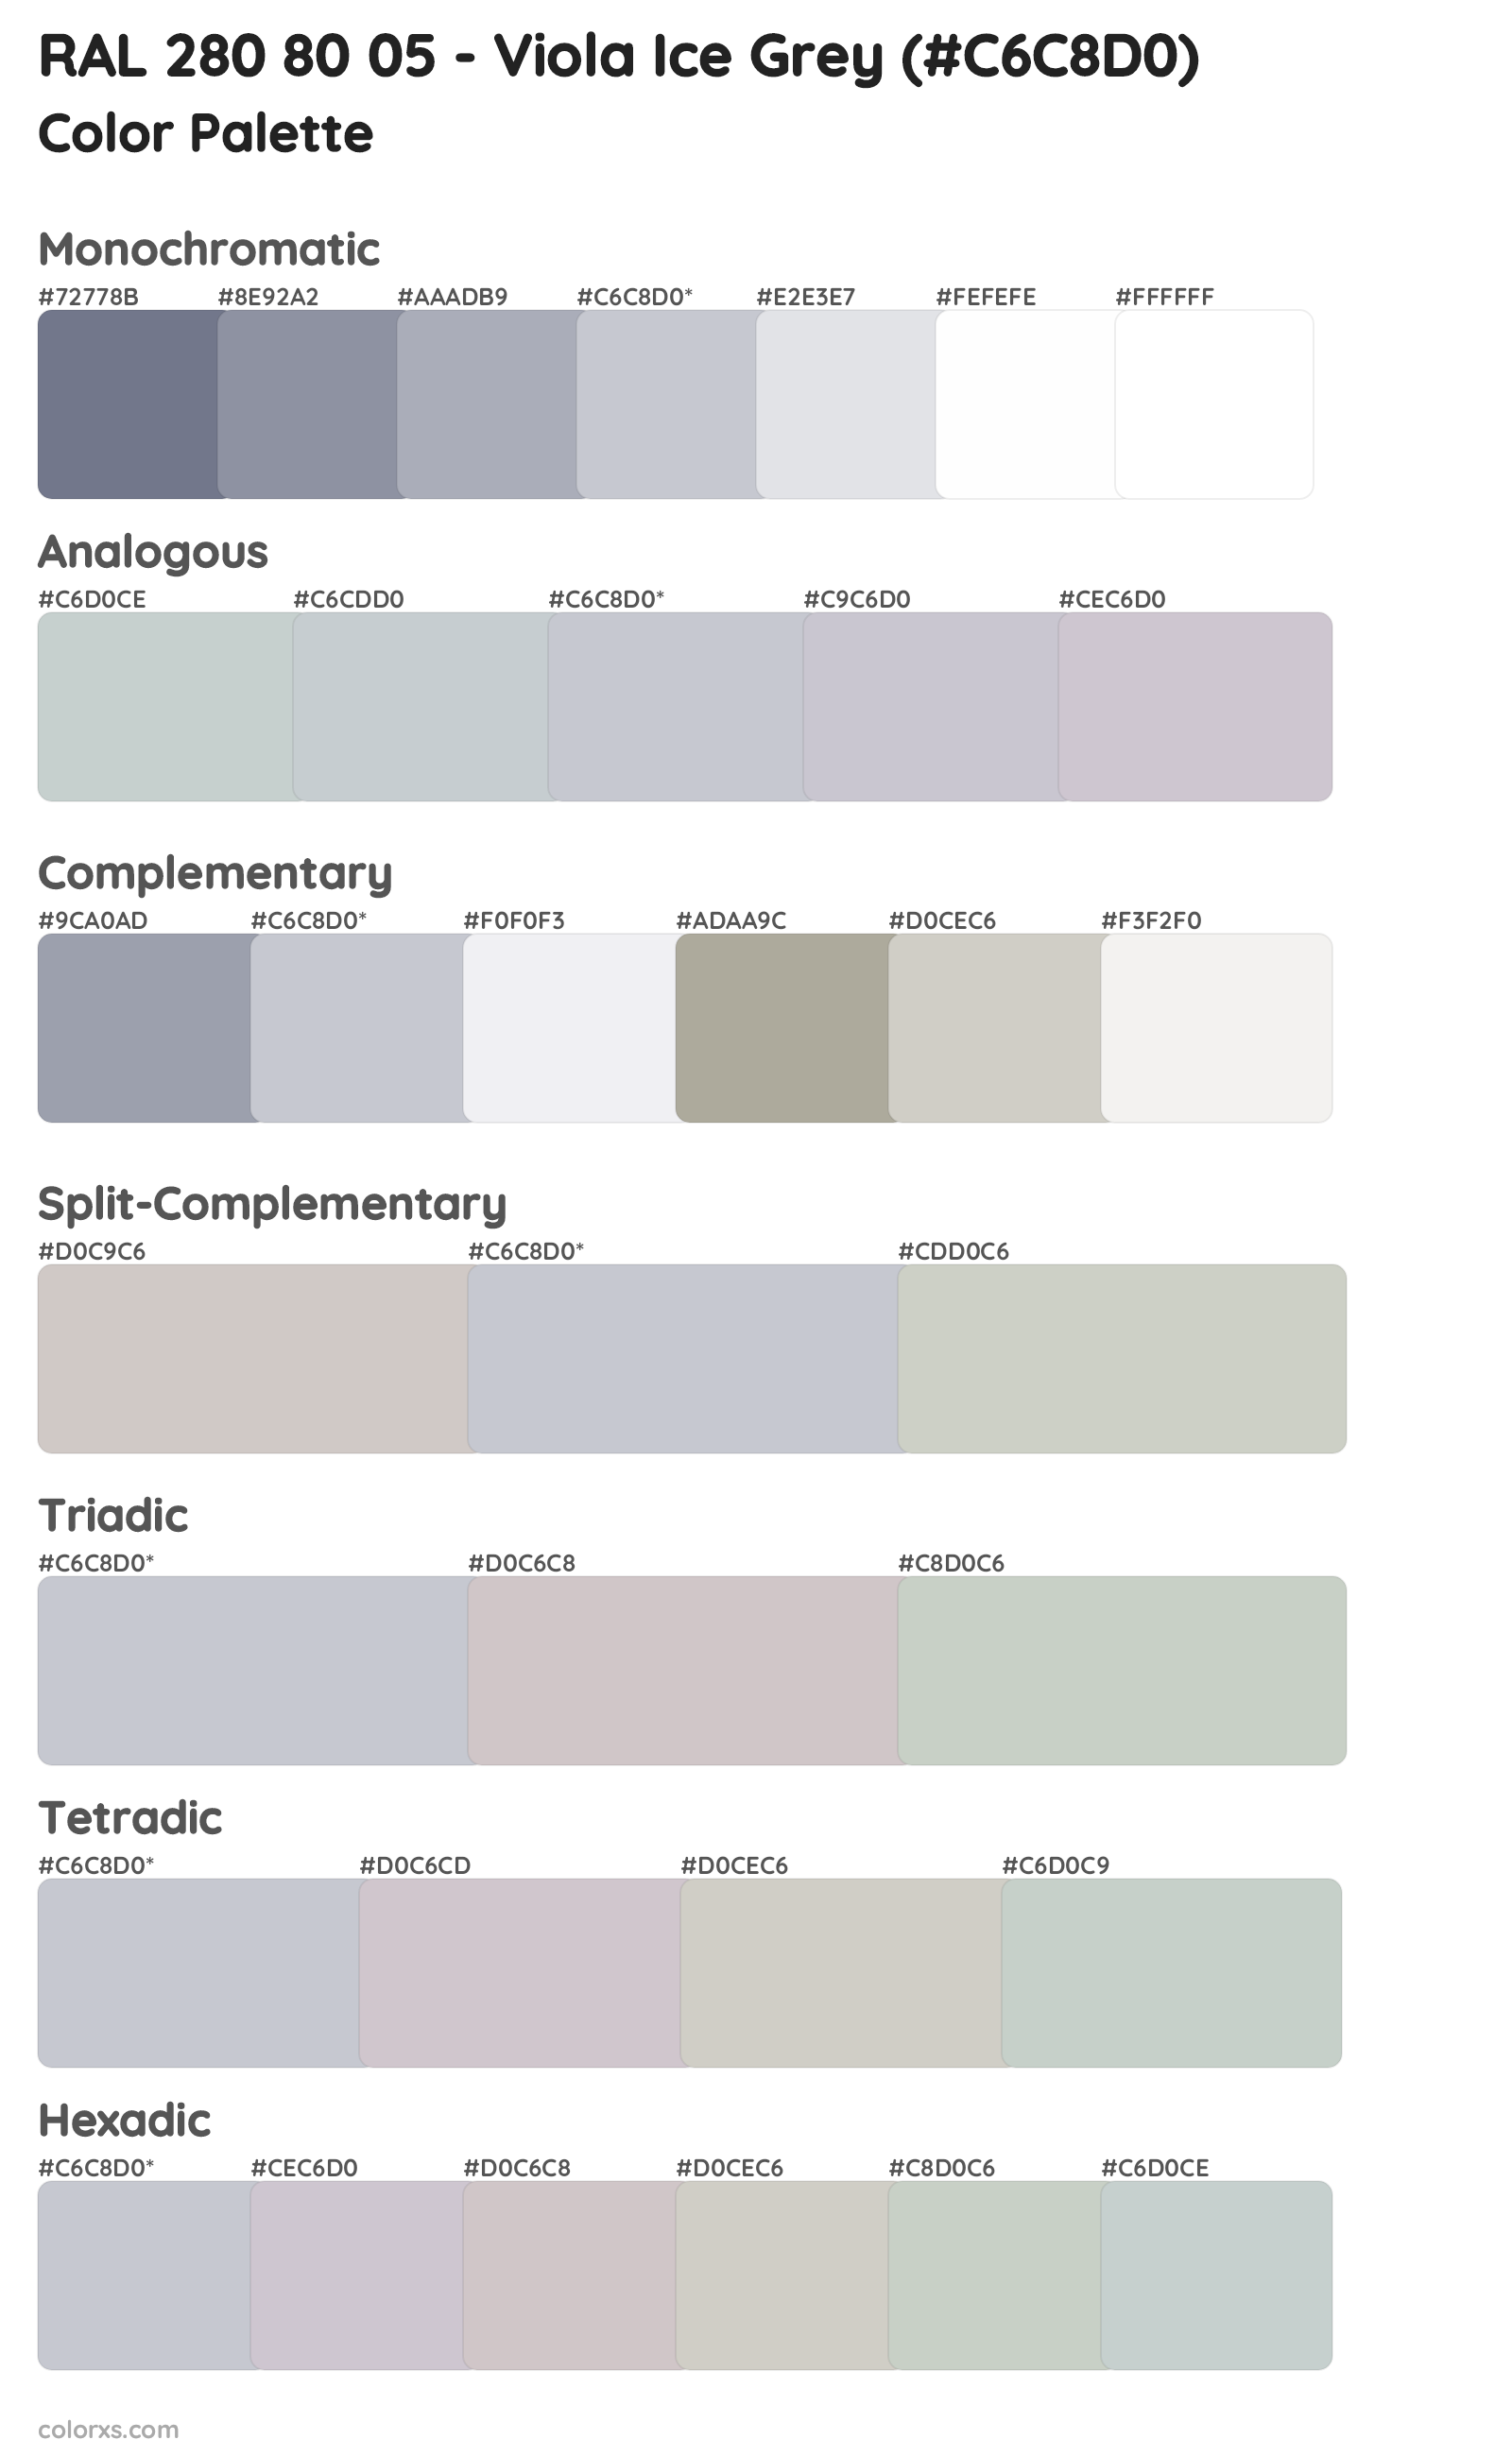 RAL 280 80 05 - Viola Ice Grey Color Scheme Palettes